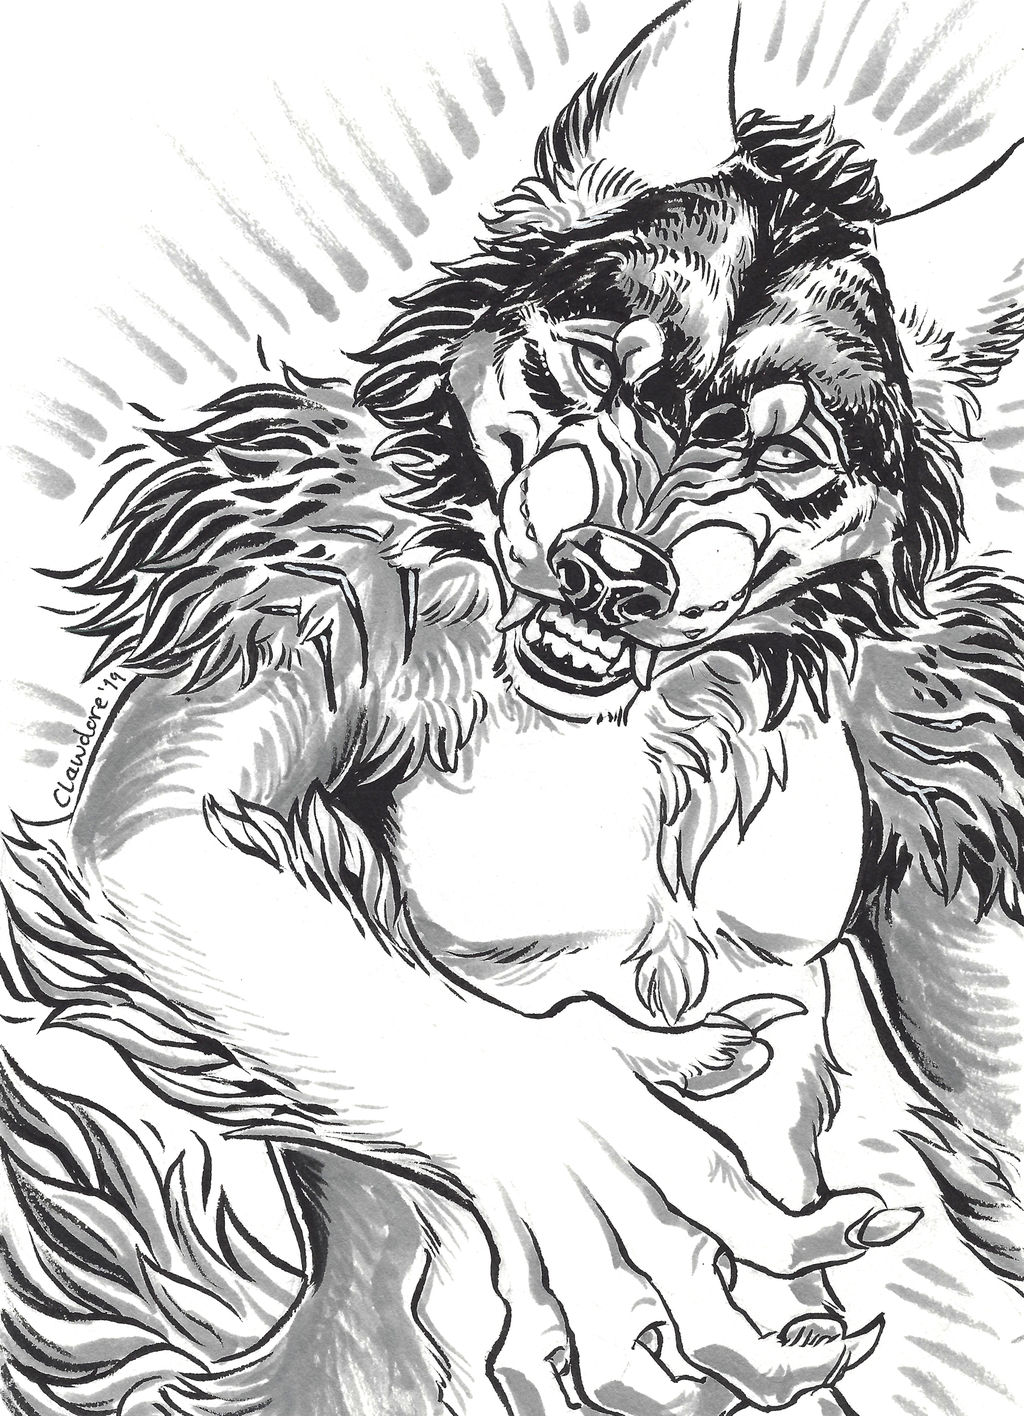 Snarly Werewolf by Clawdore